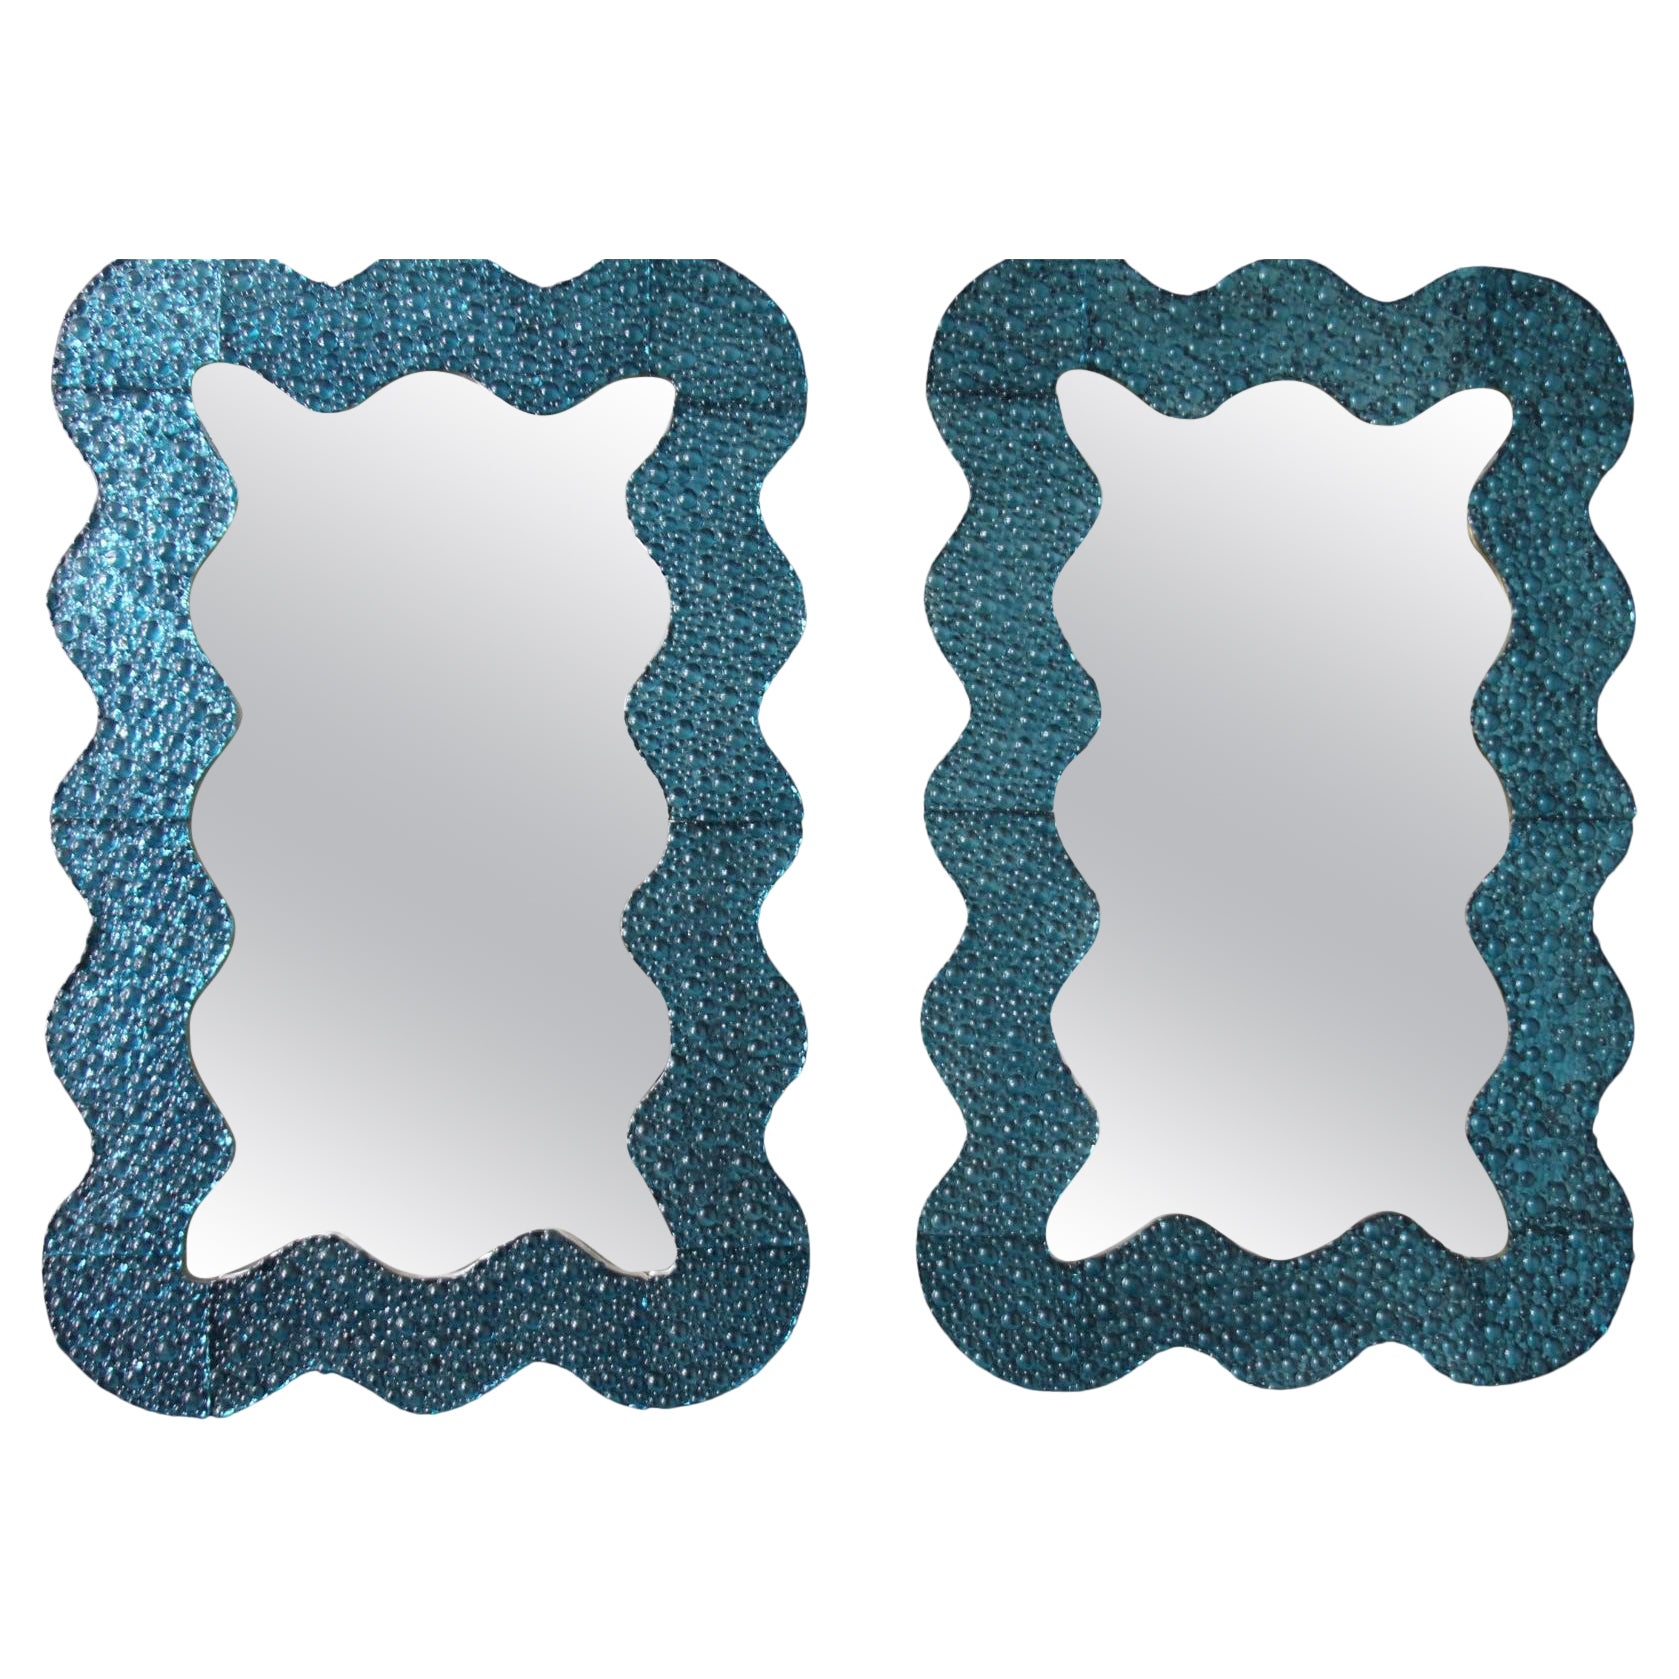 Grands miroirs en verre de Murano texturé bleu turquoise ondulé, en stock en vente